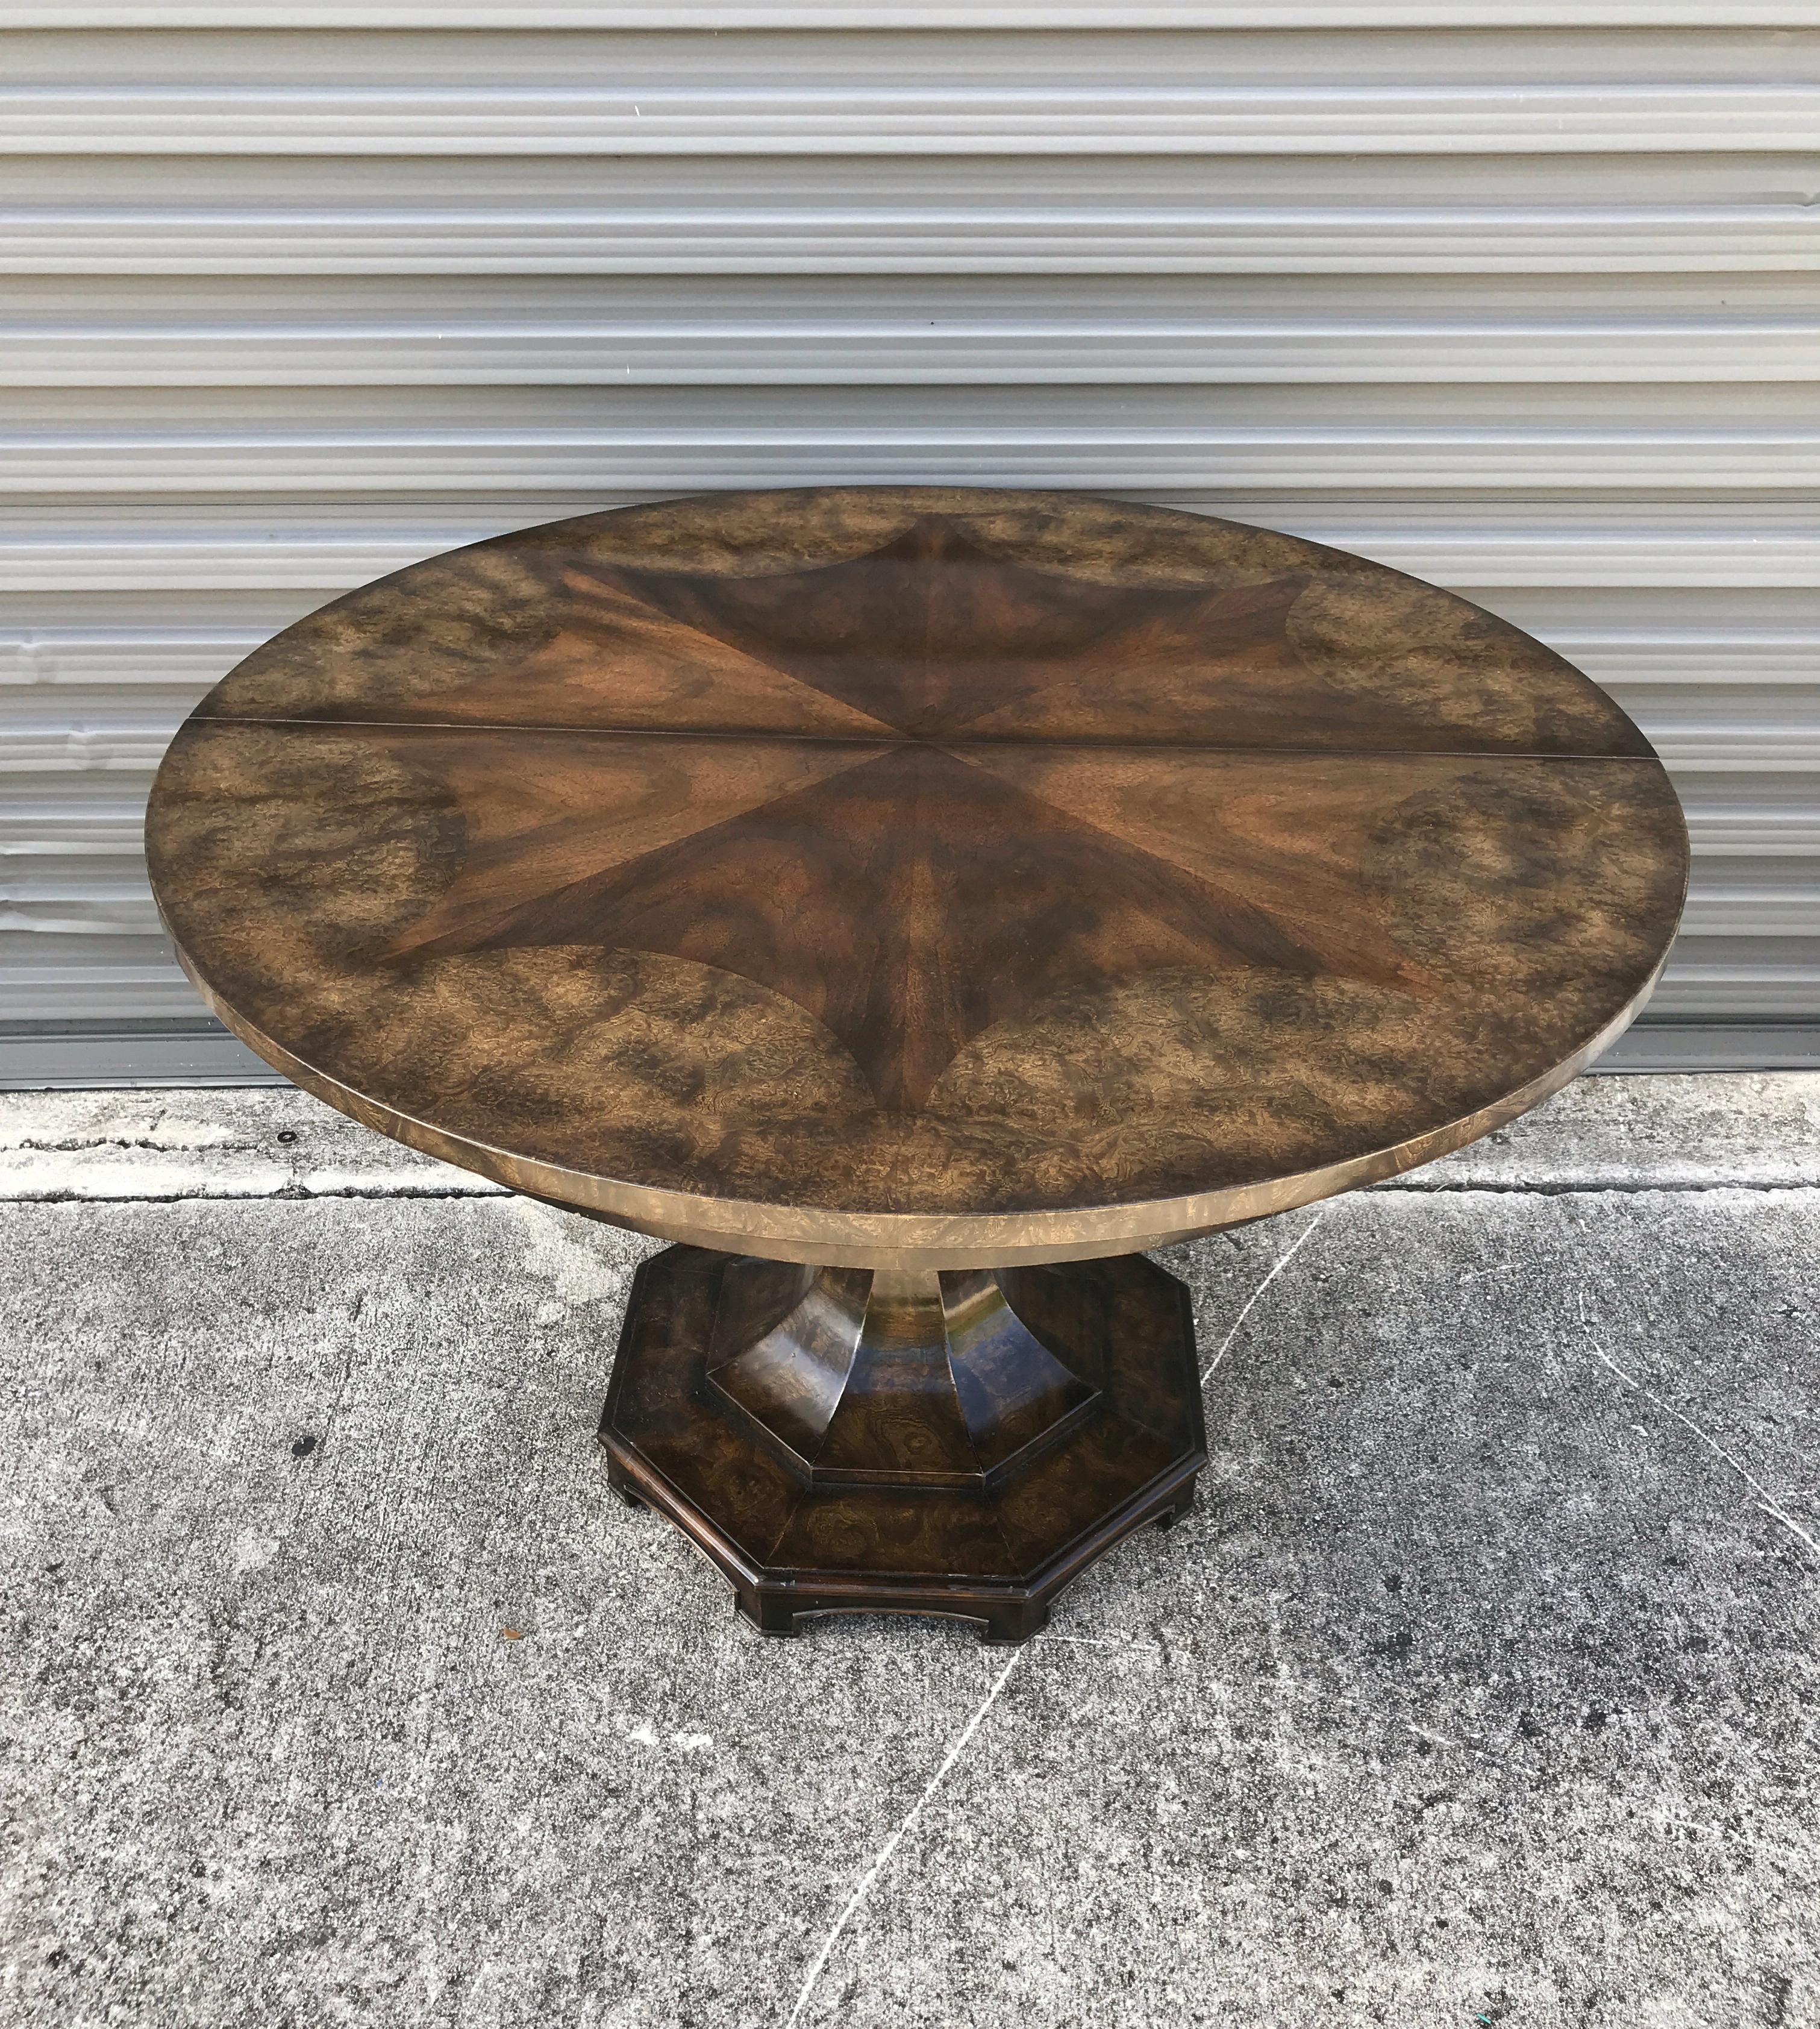 Mastercraft amboyna wood pedestal ‘extension’ dining room table
Measures: 45